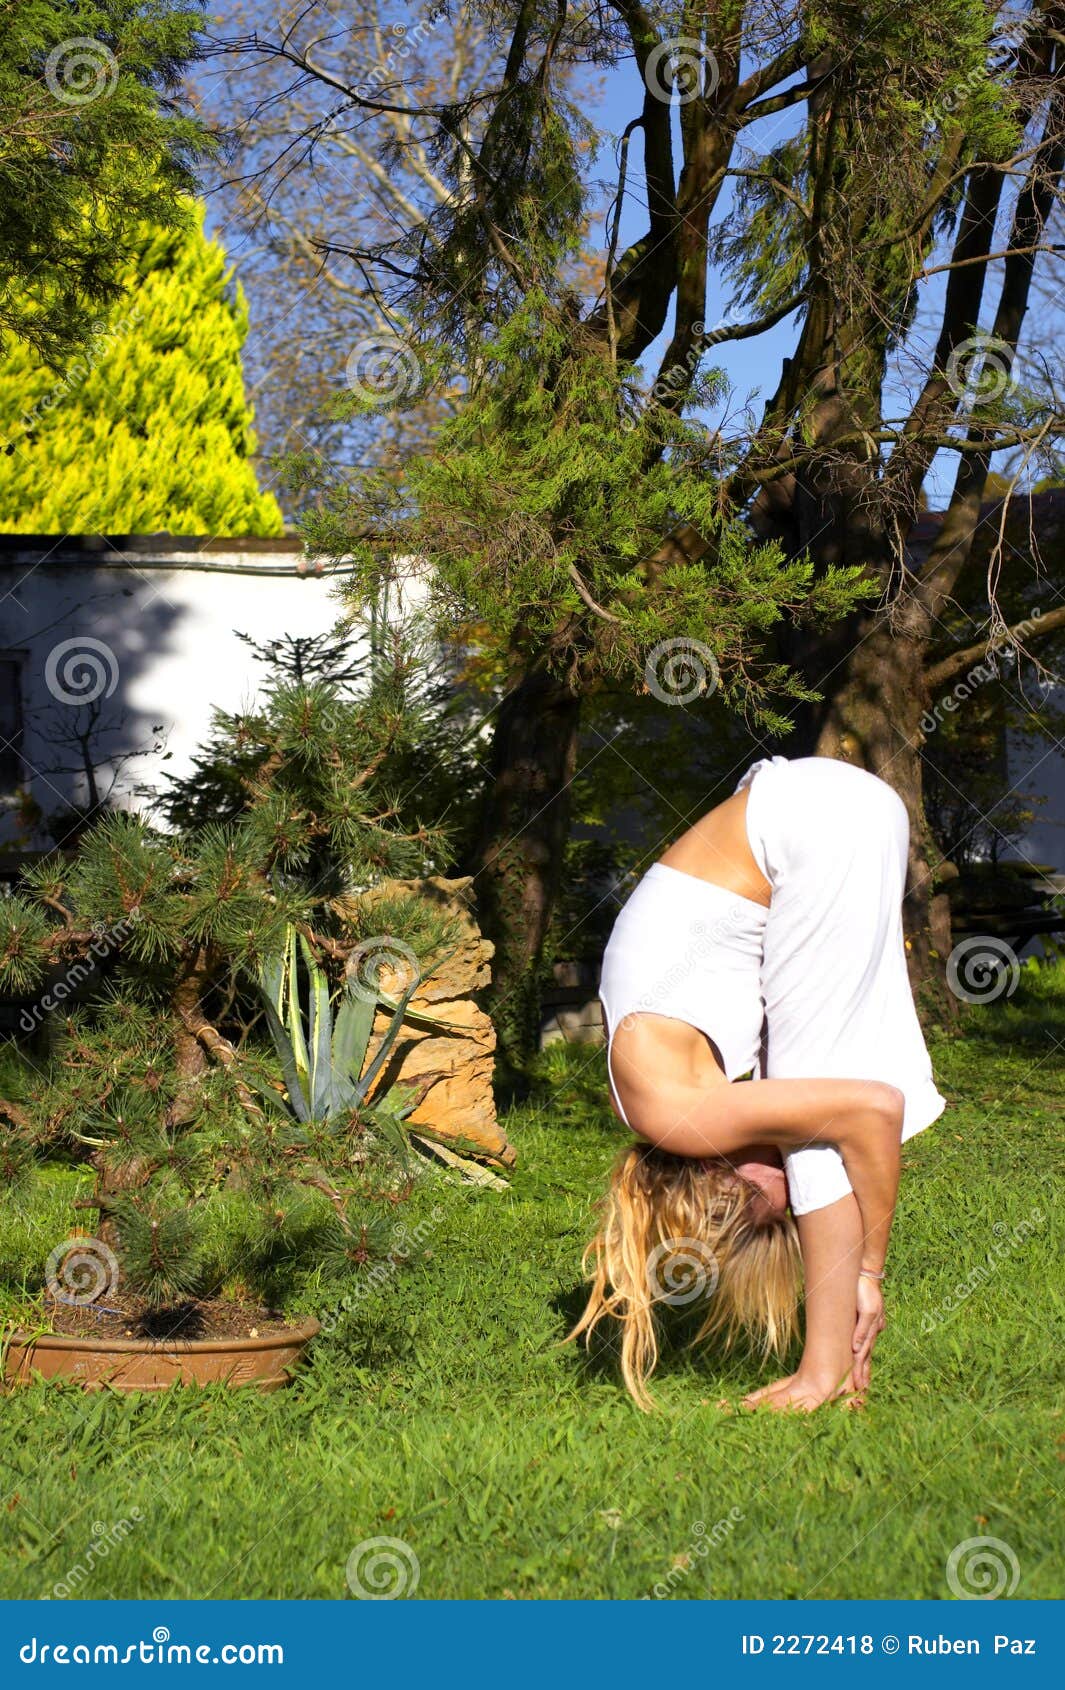 Woman In Yoga Pose In Garden Royalty Free Stock Photos